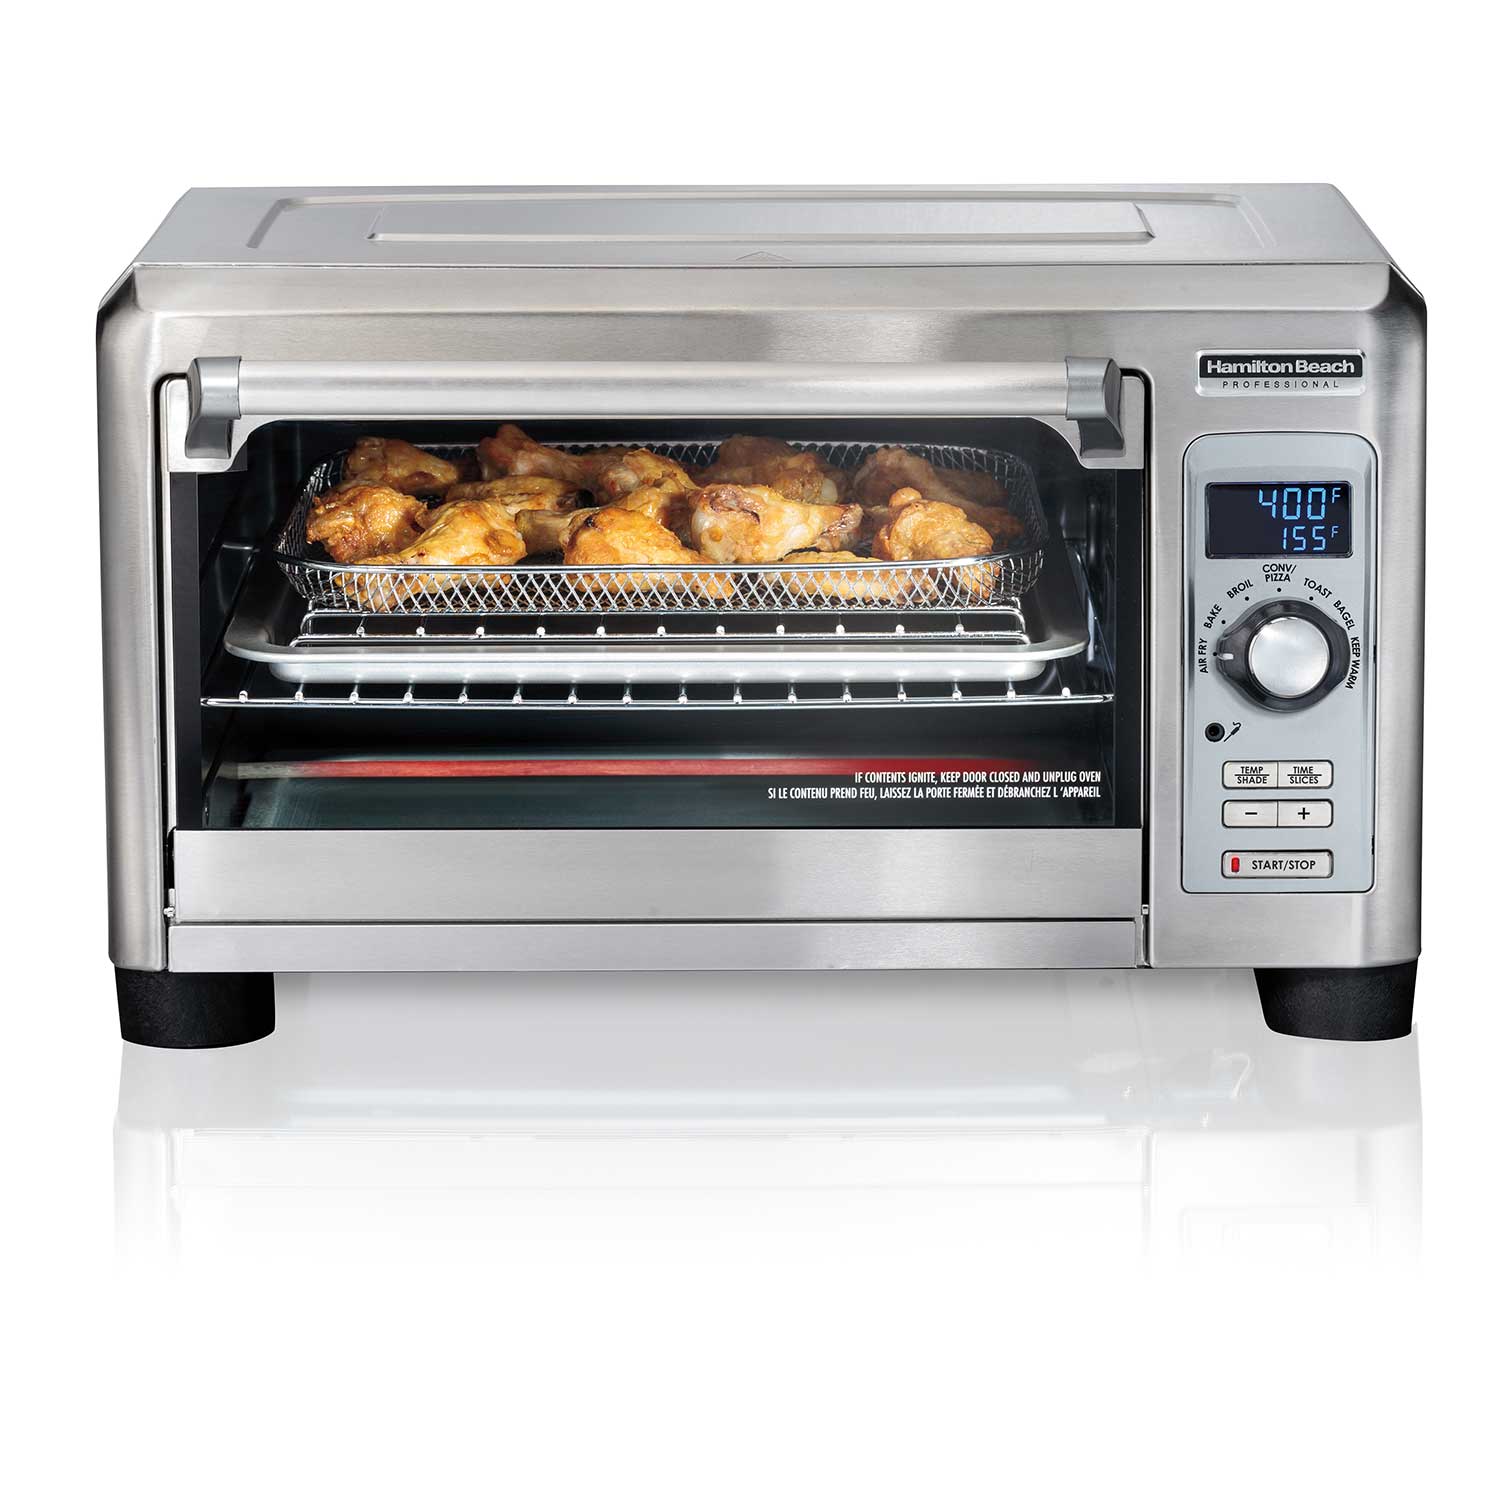 Hamilton Beach Hamilton Beach® Professional Sure-Crisp® Digital Air Fryer Countertop  Oven - 31243